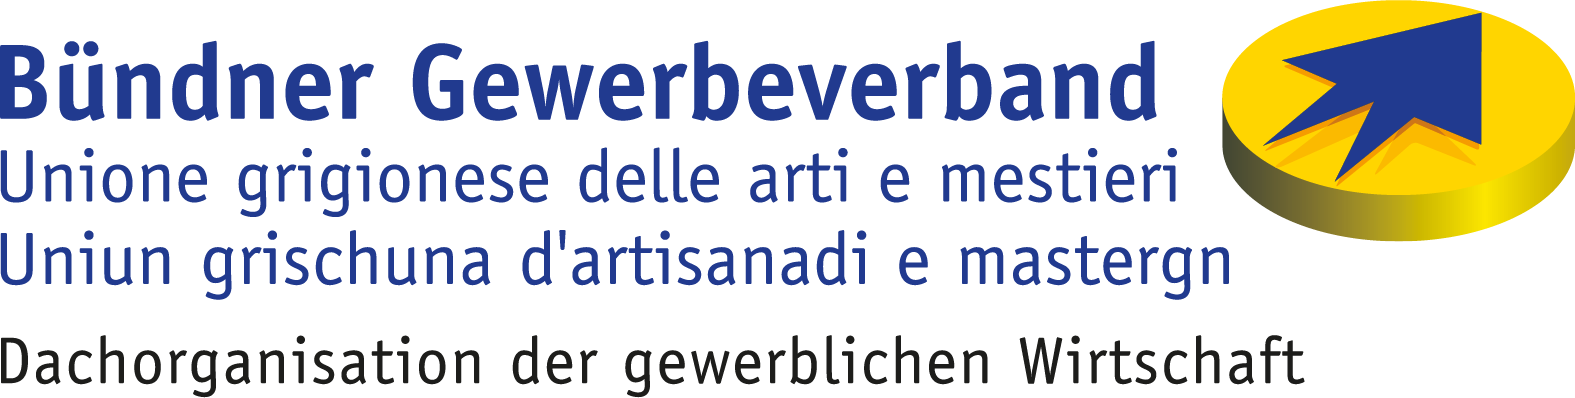 Logo Bündner Gewerbeverband